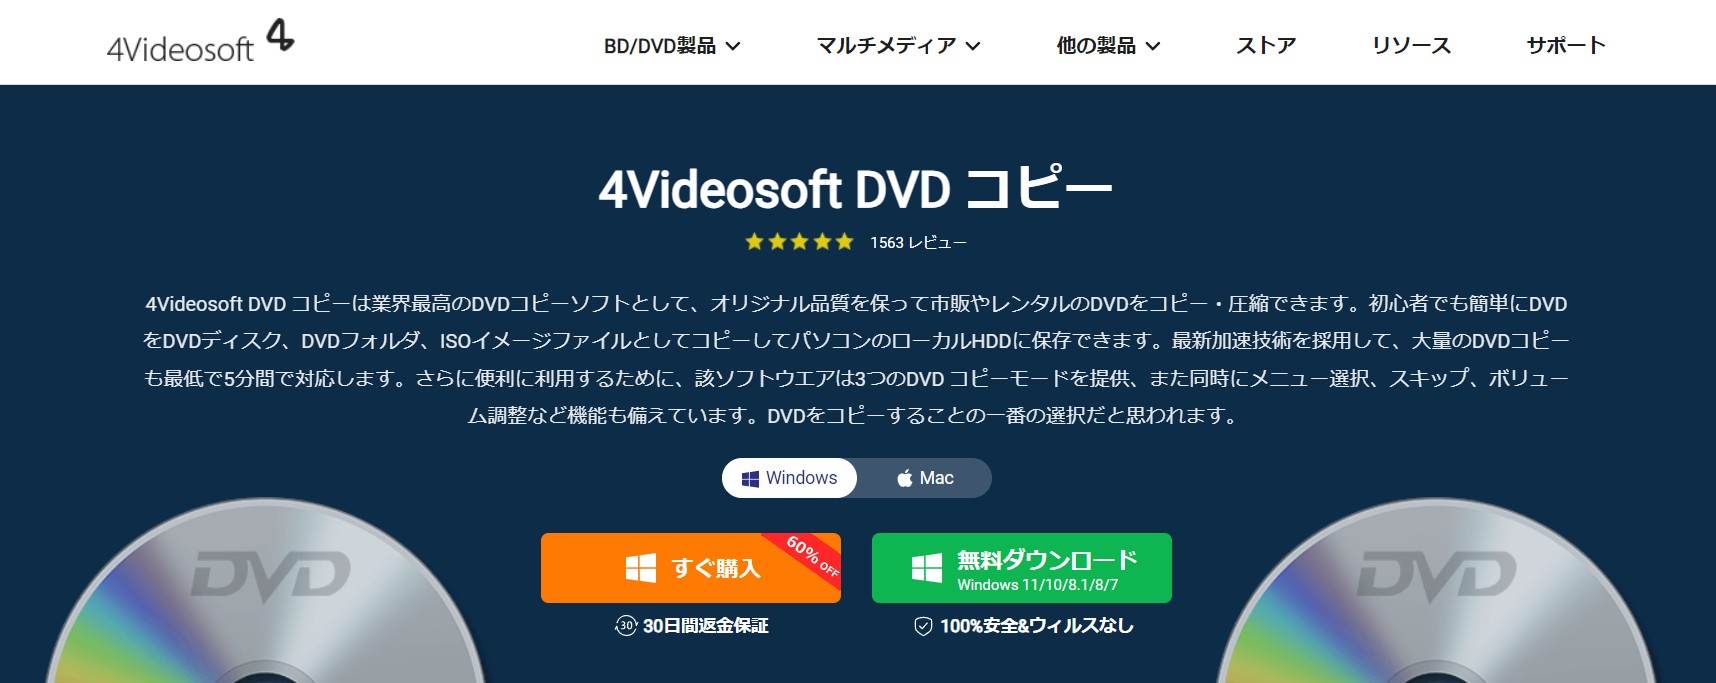 WinX DVD Ripper Platinum 8.5Windows用 [ダウンロード版] | 永久ライセンス PC1台 日本語版